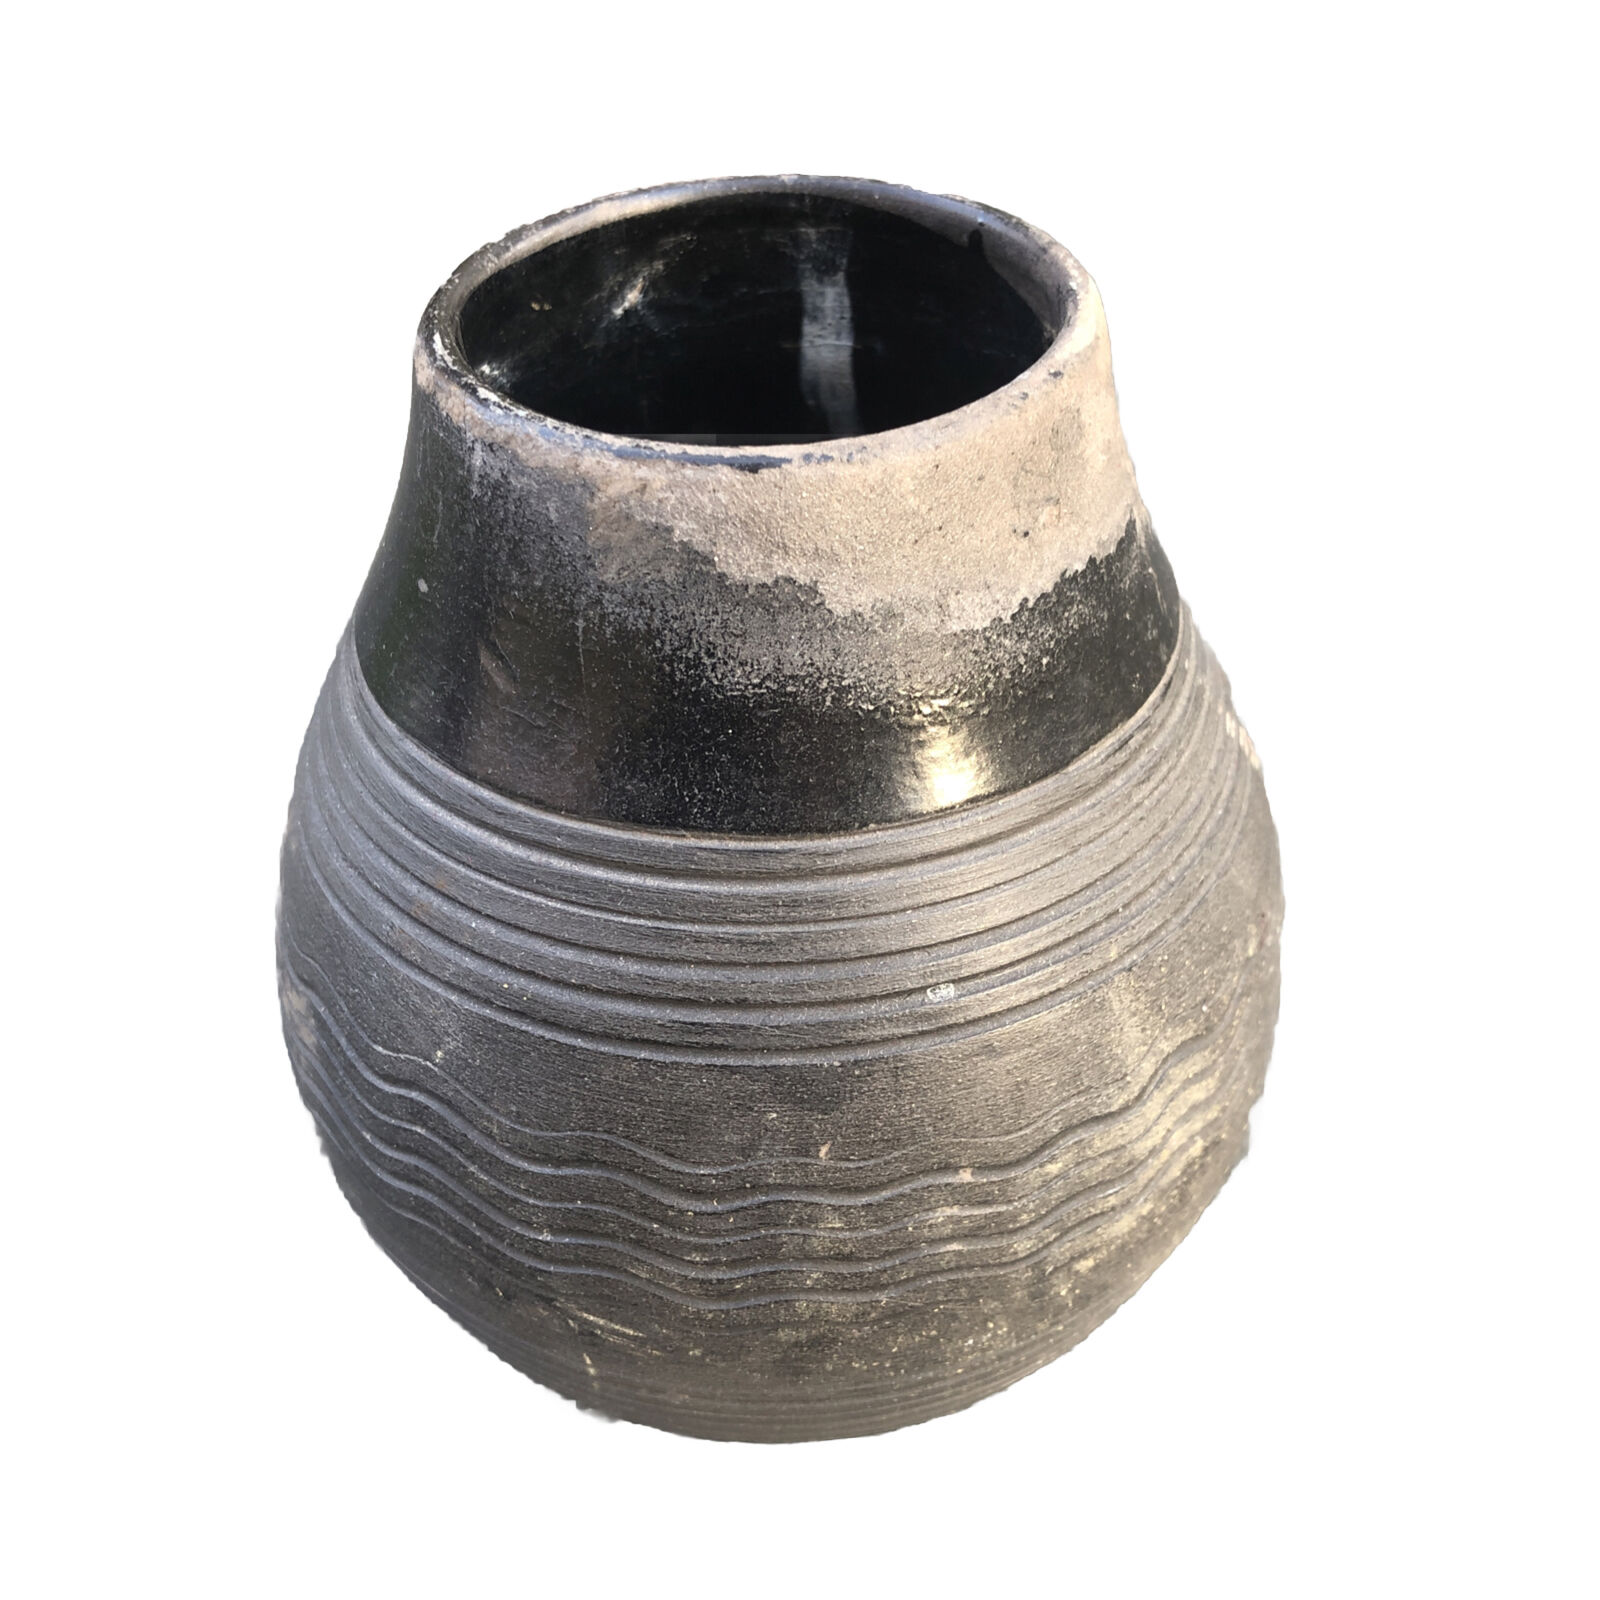 Vintage Native American Mexican Black Glazed Pottery Vase 5”